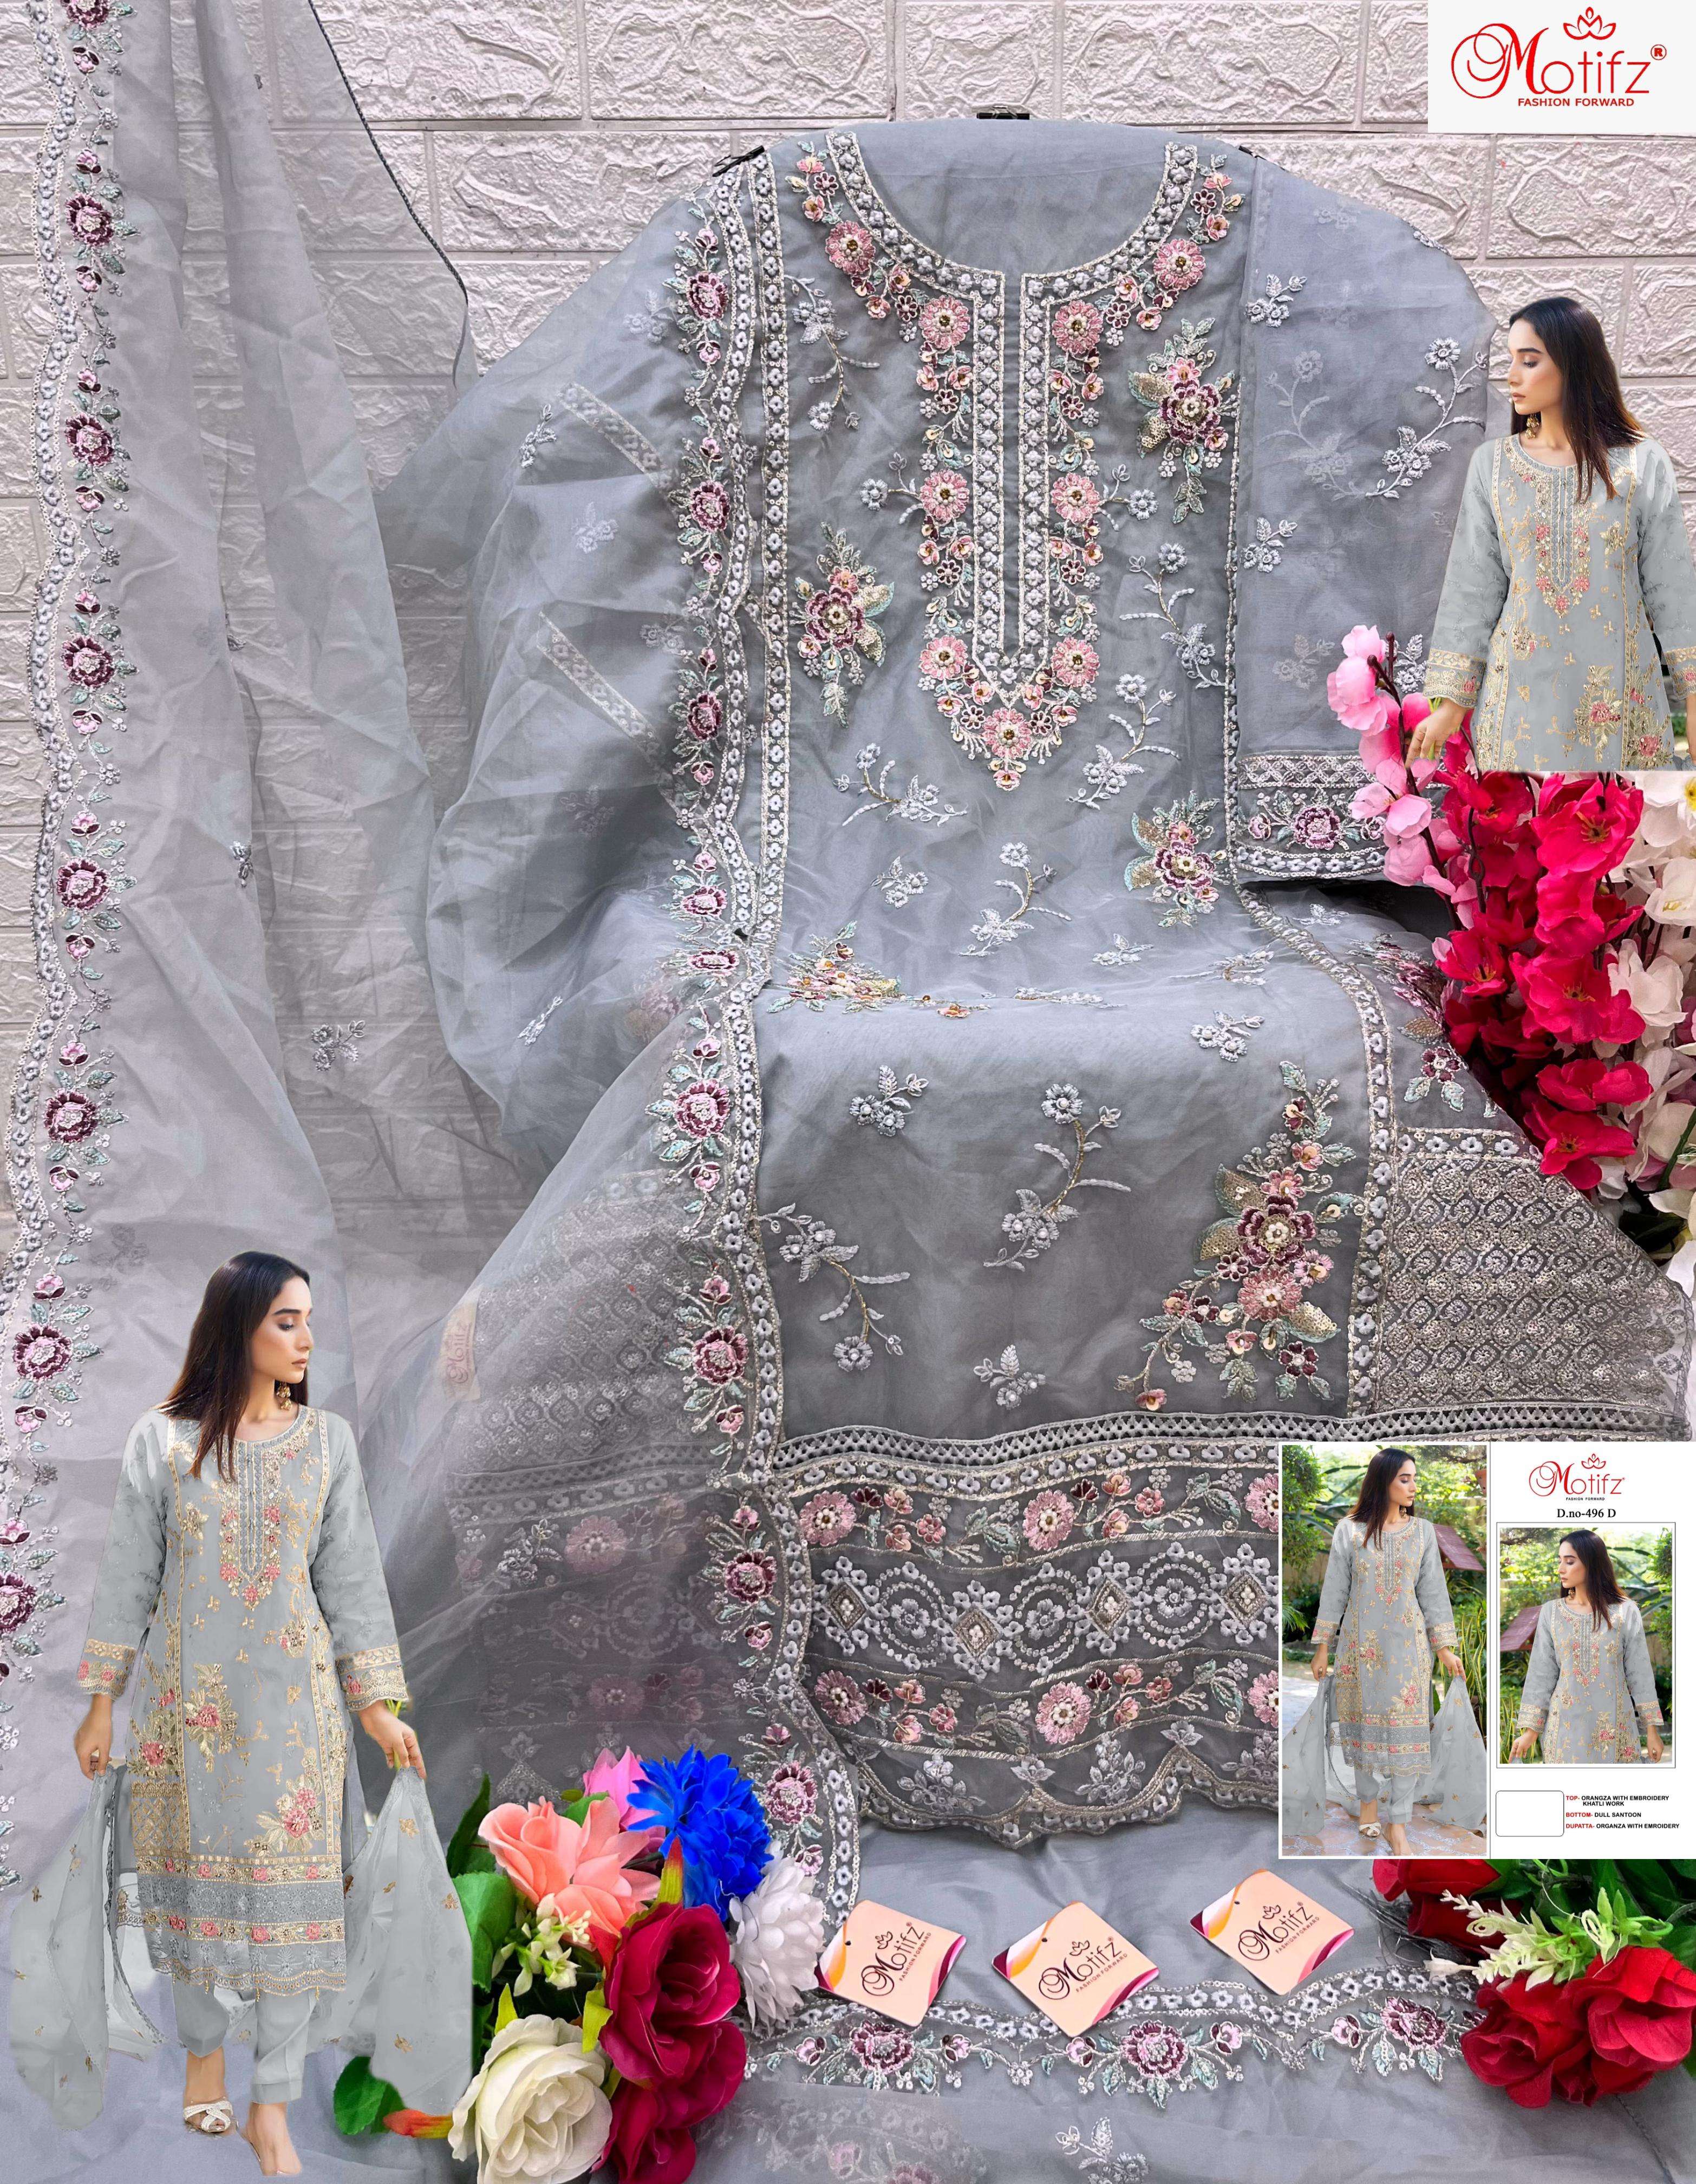 motifz 496 colour series latest wedding wear pakistani salwar kameez wholesaler price surat gujarat